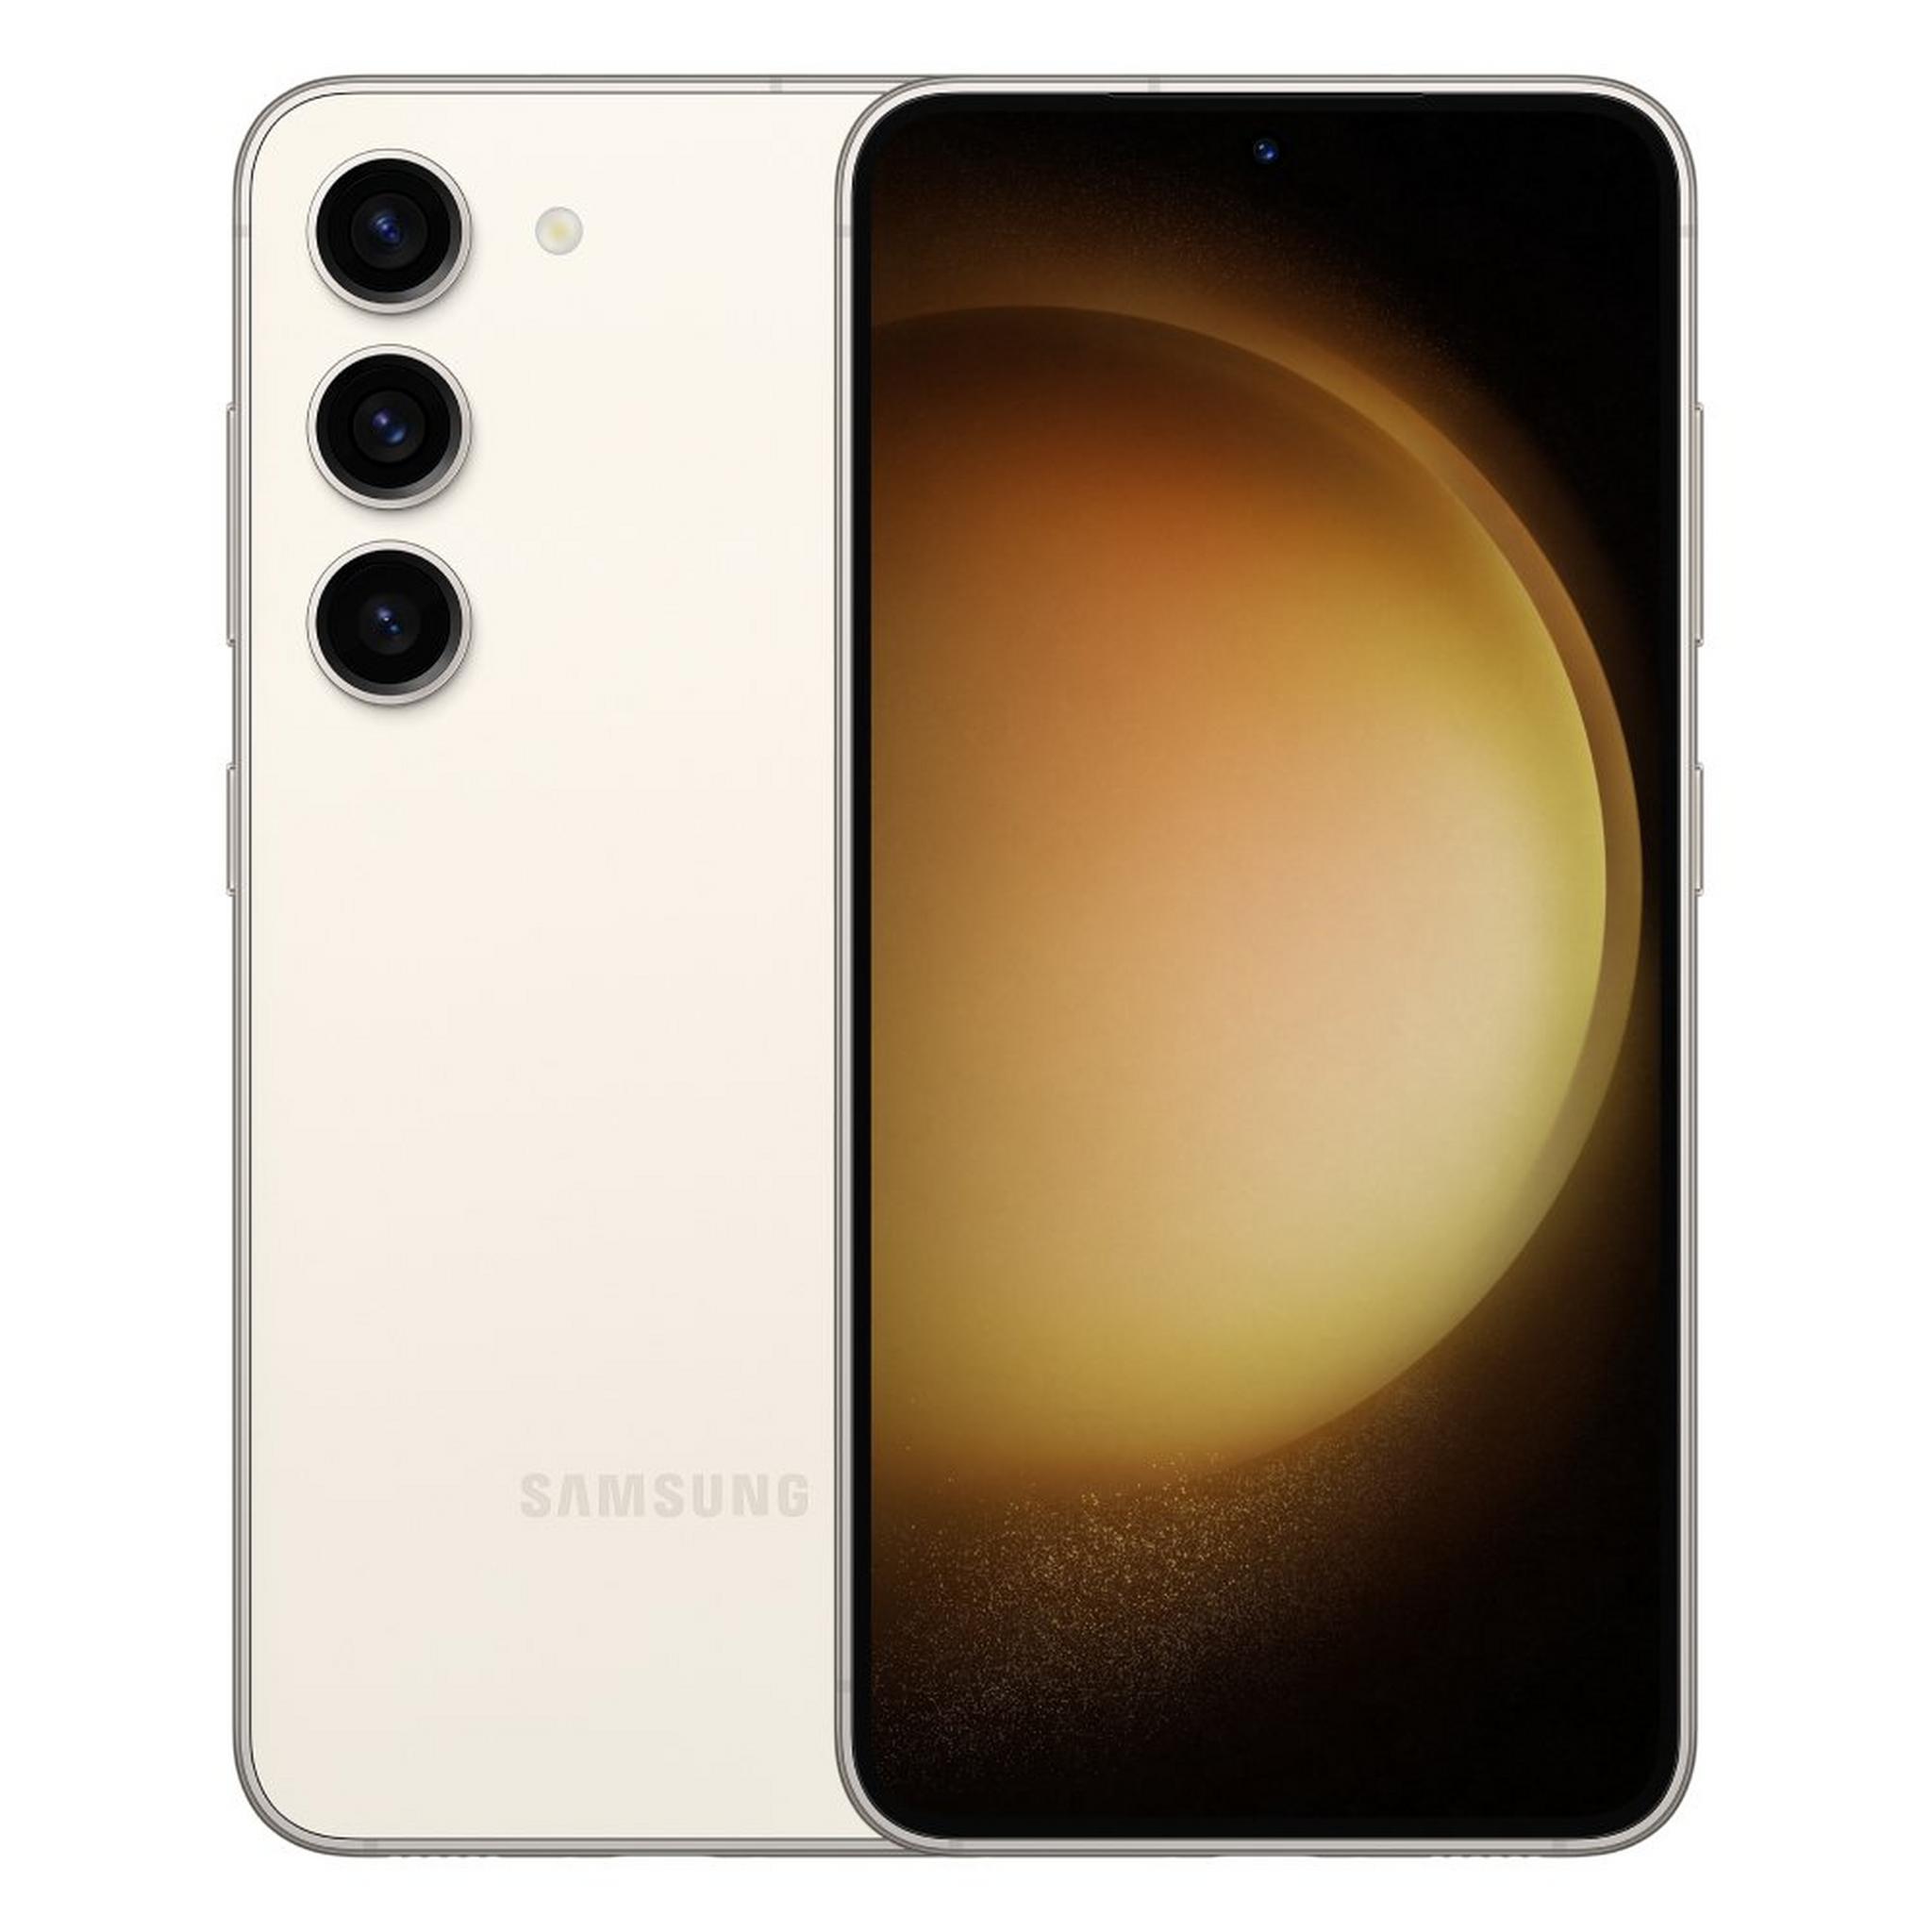 Samsung Galaxy S23+ 256GB Phone - Cream